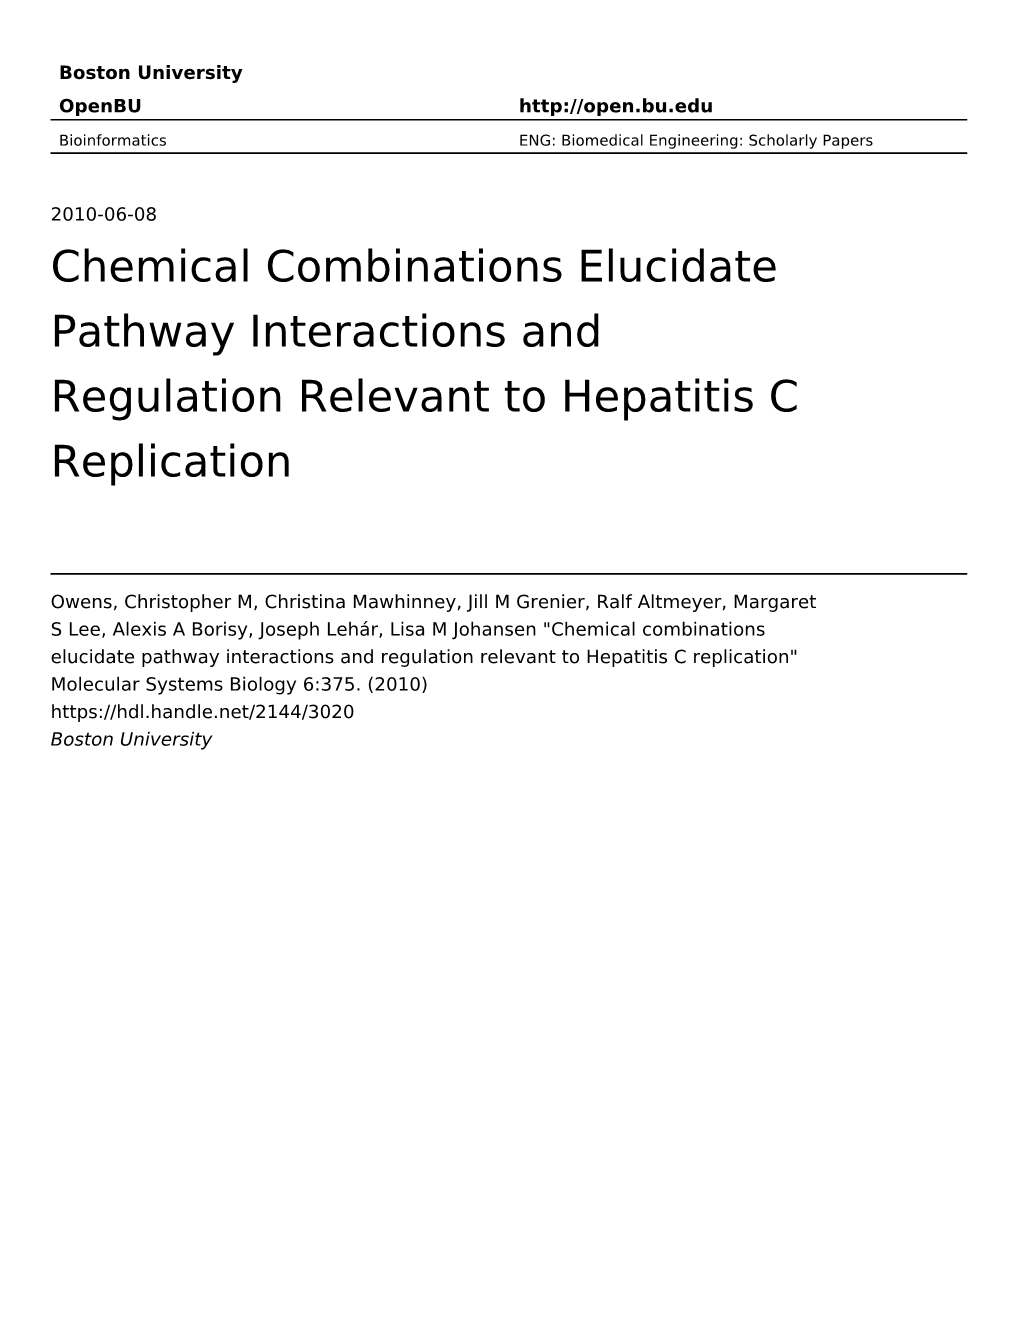 Chemical Combinations Elucidate Pathway Interactions and Regulation Relevant to Hepatitis C Replication